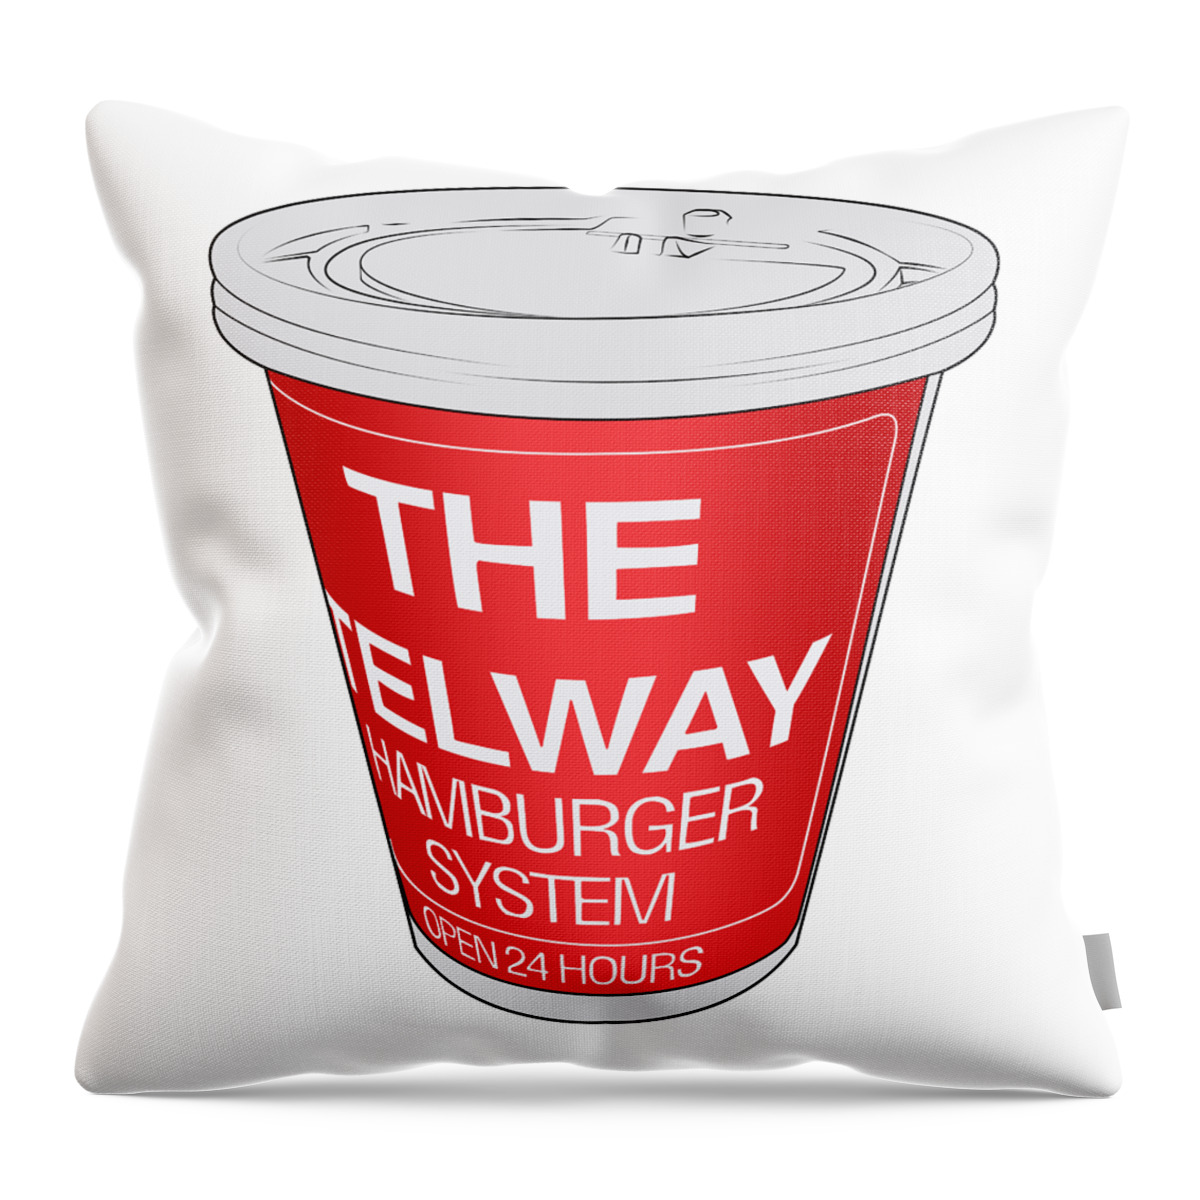  Throw Pillow featuring the digital art Telway by Nicholas Grunas